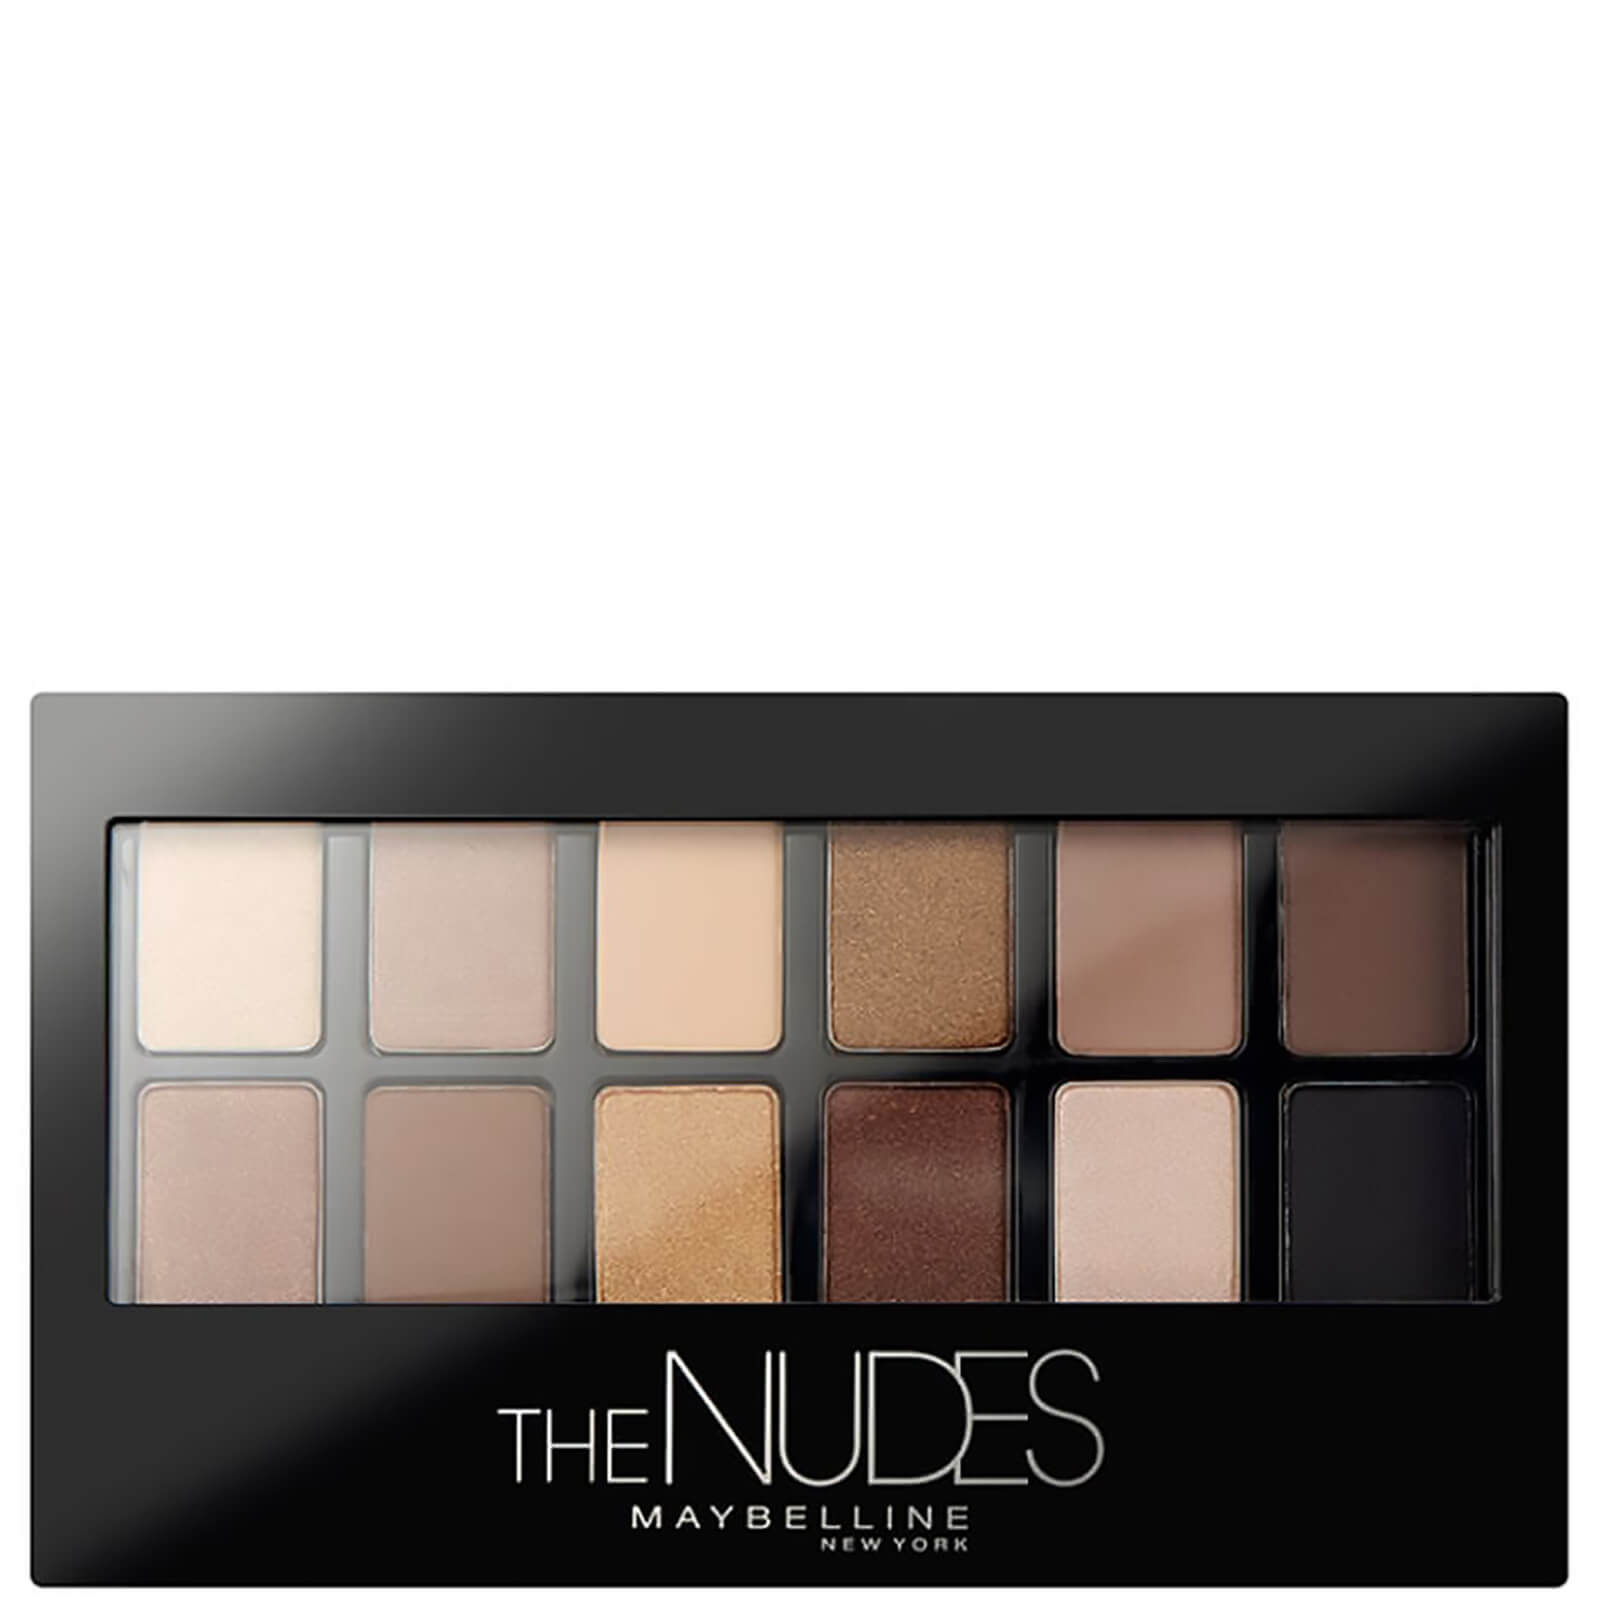 Photos - Eyeshadow Maybelline Eye Shadow Palette - The Nudes B2913202 